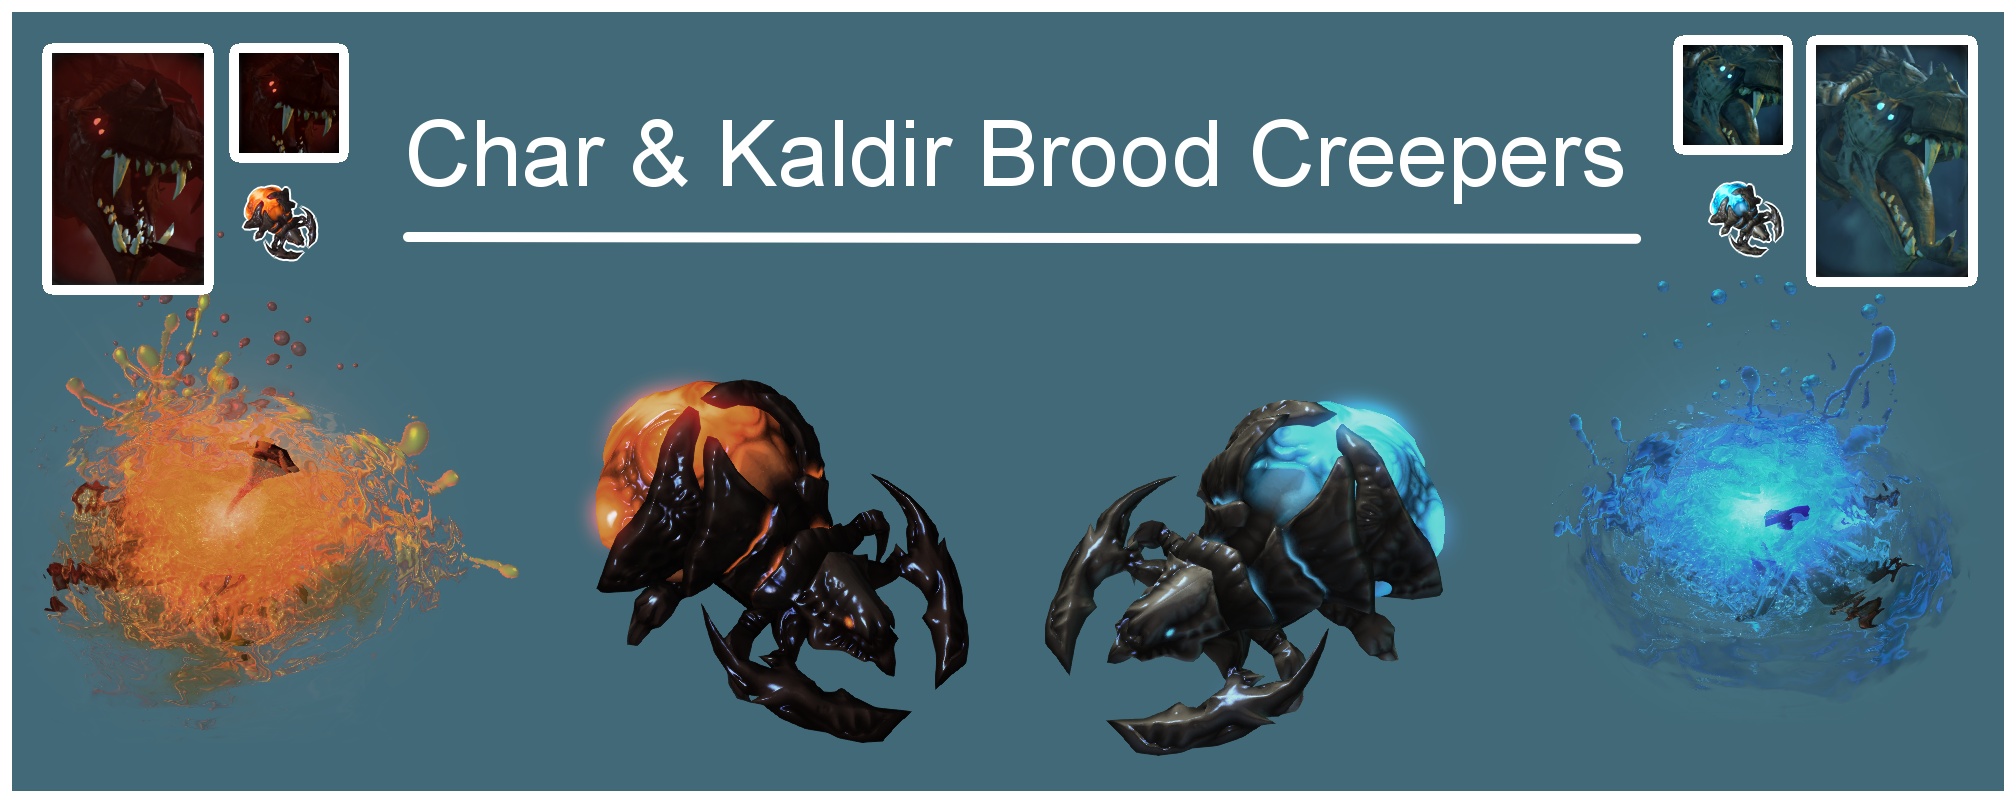 Char & Kaldir Brood Creepers